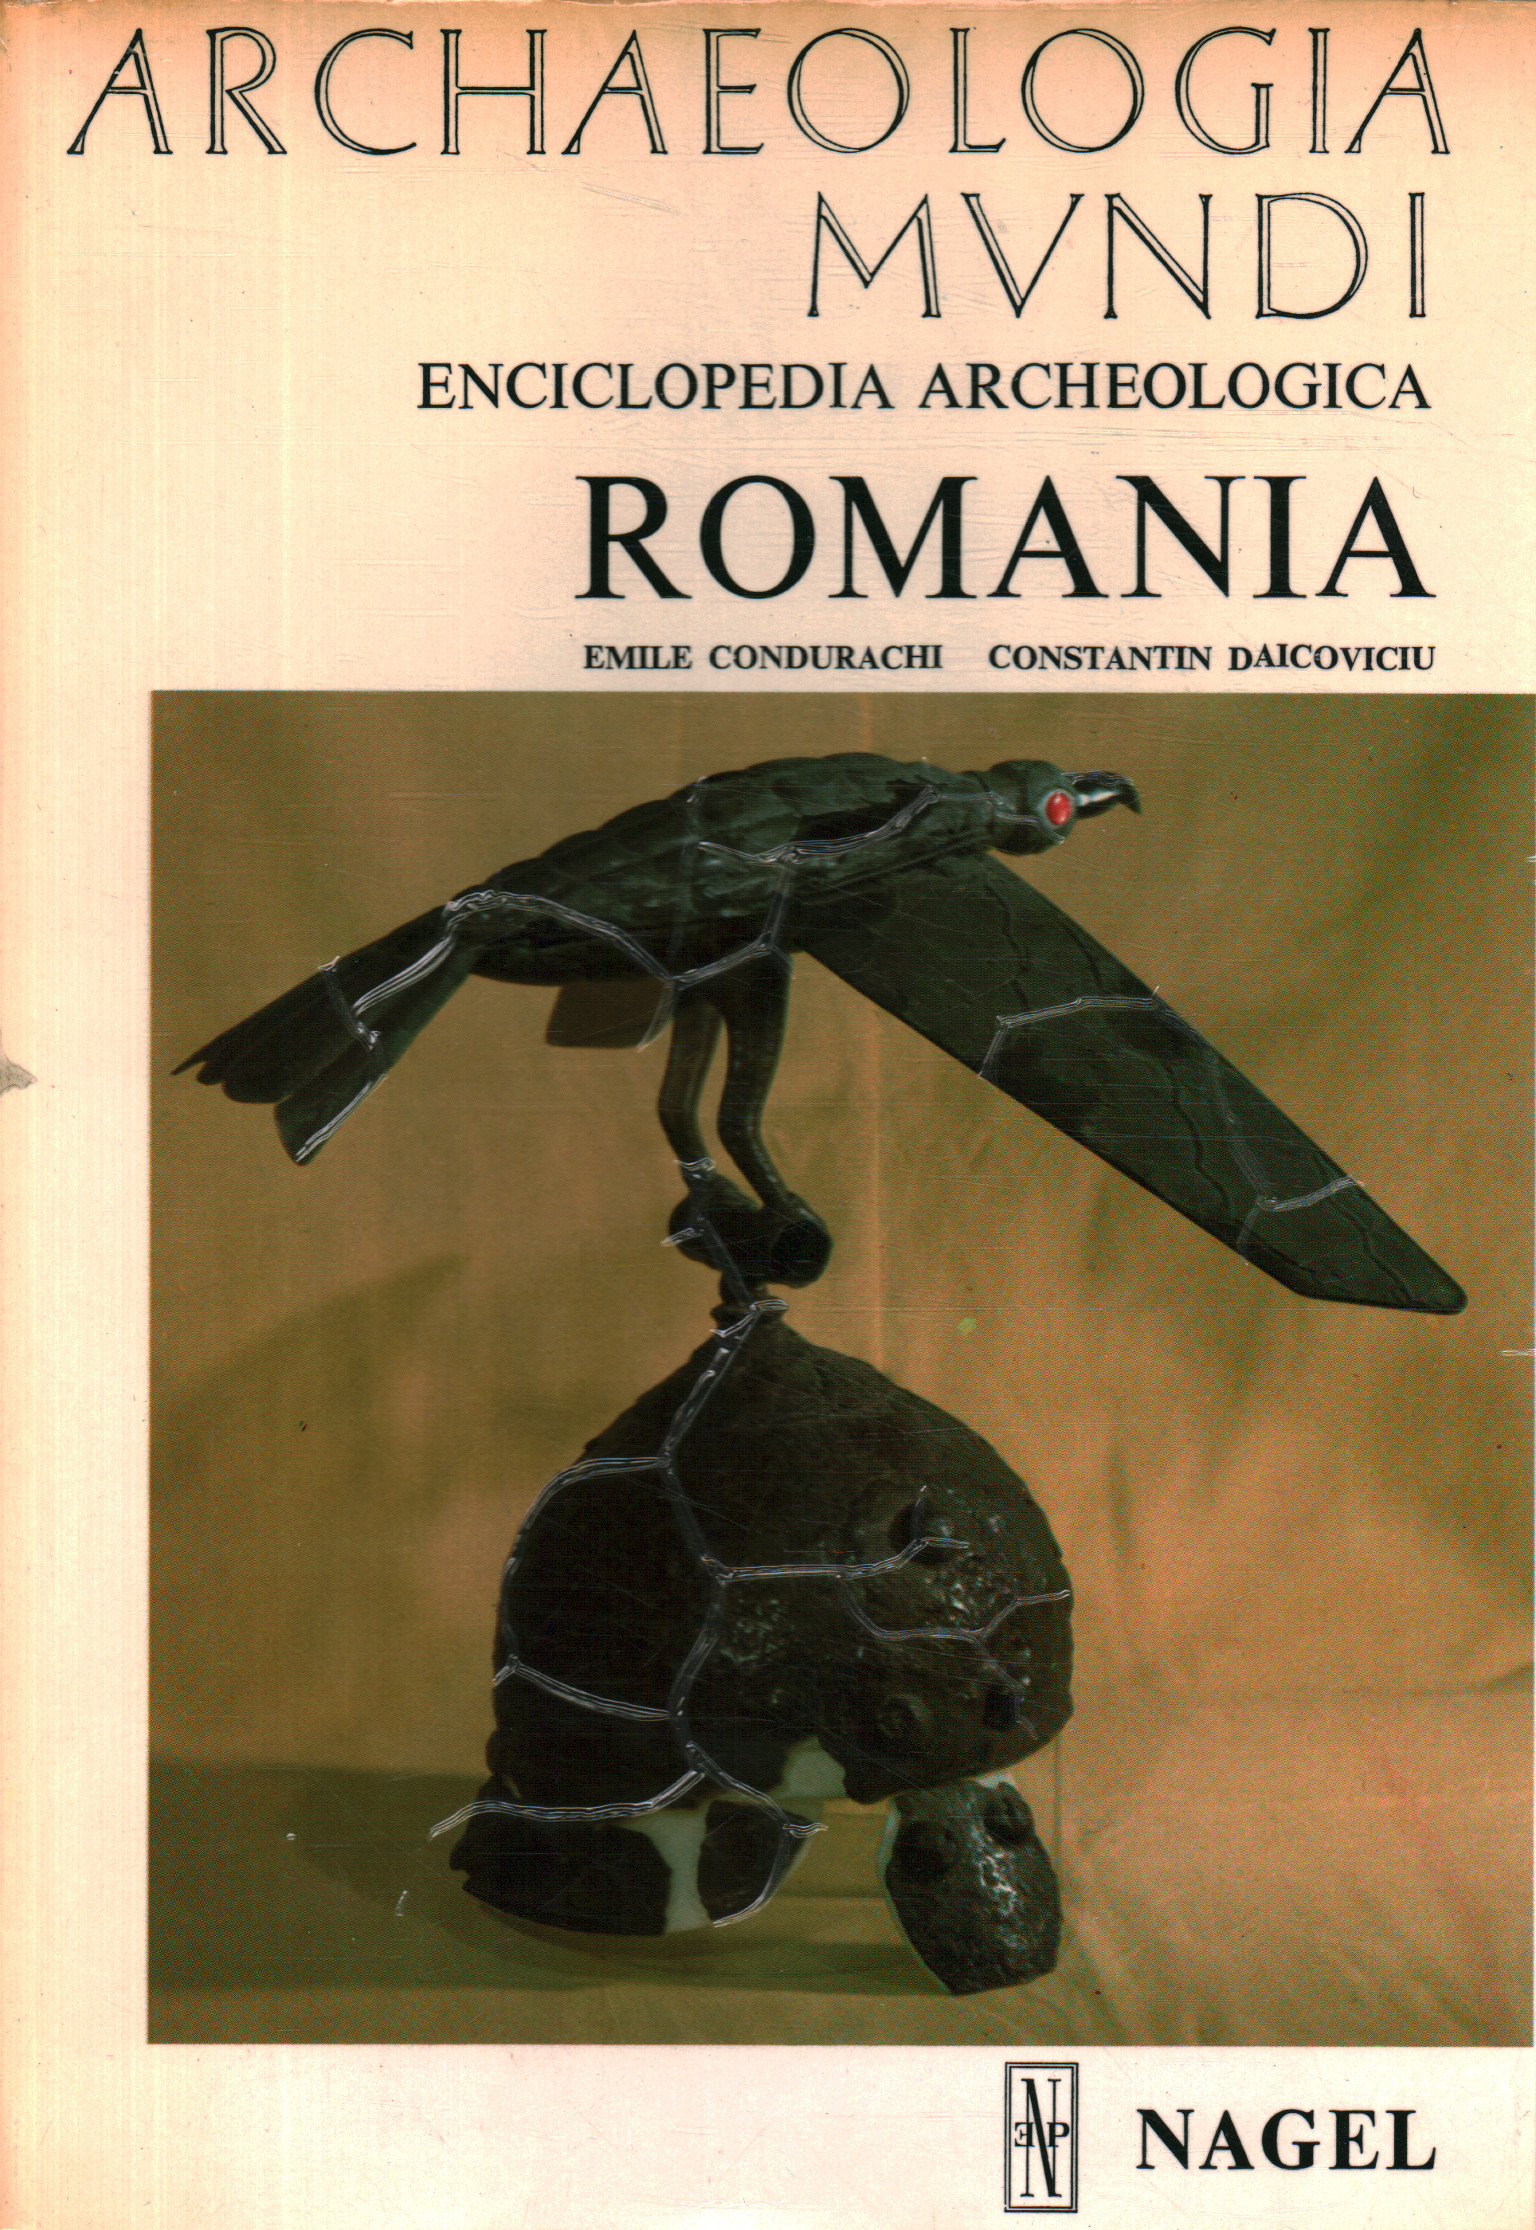 Archaeological encyclopedia. Romania